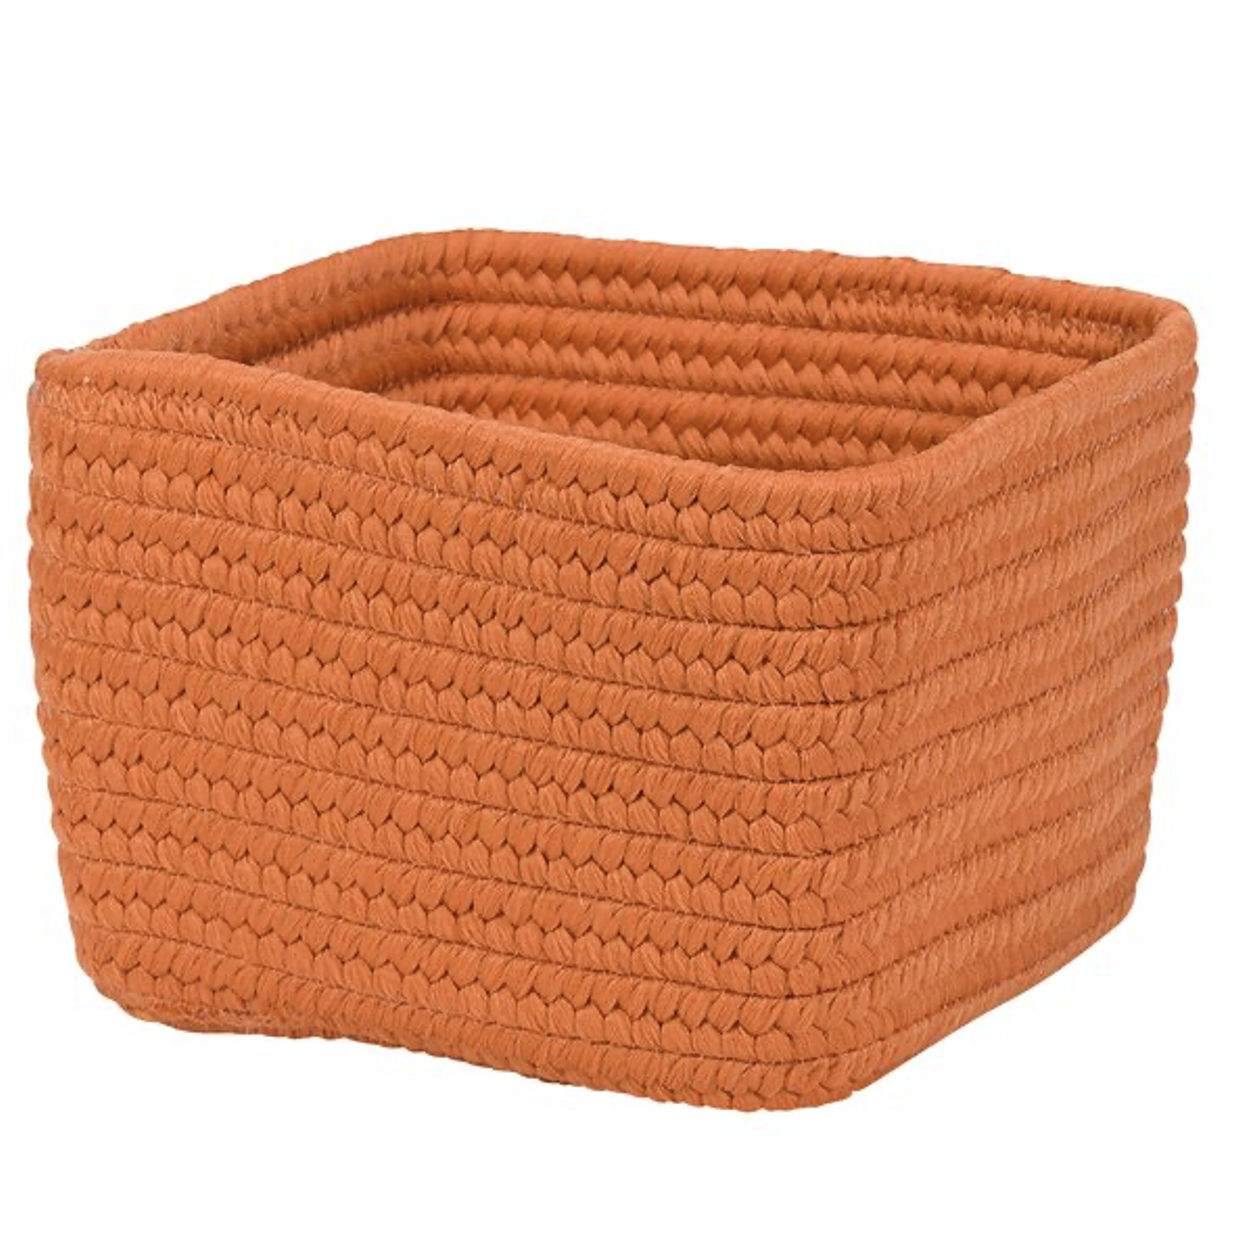 orange woven basket